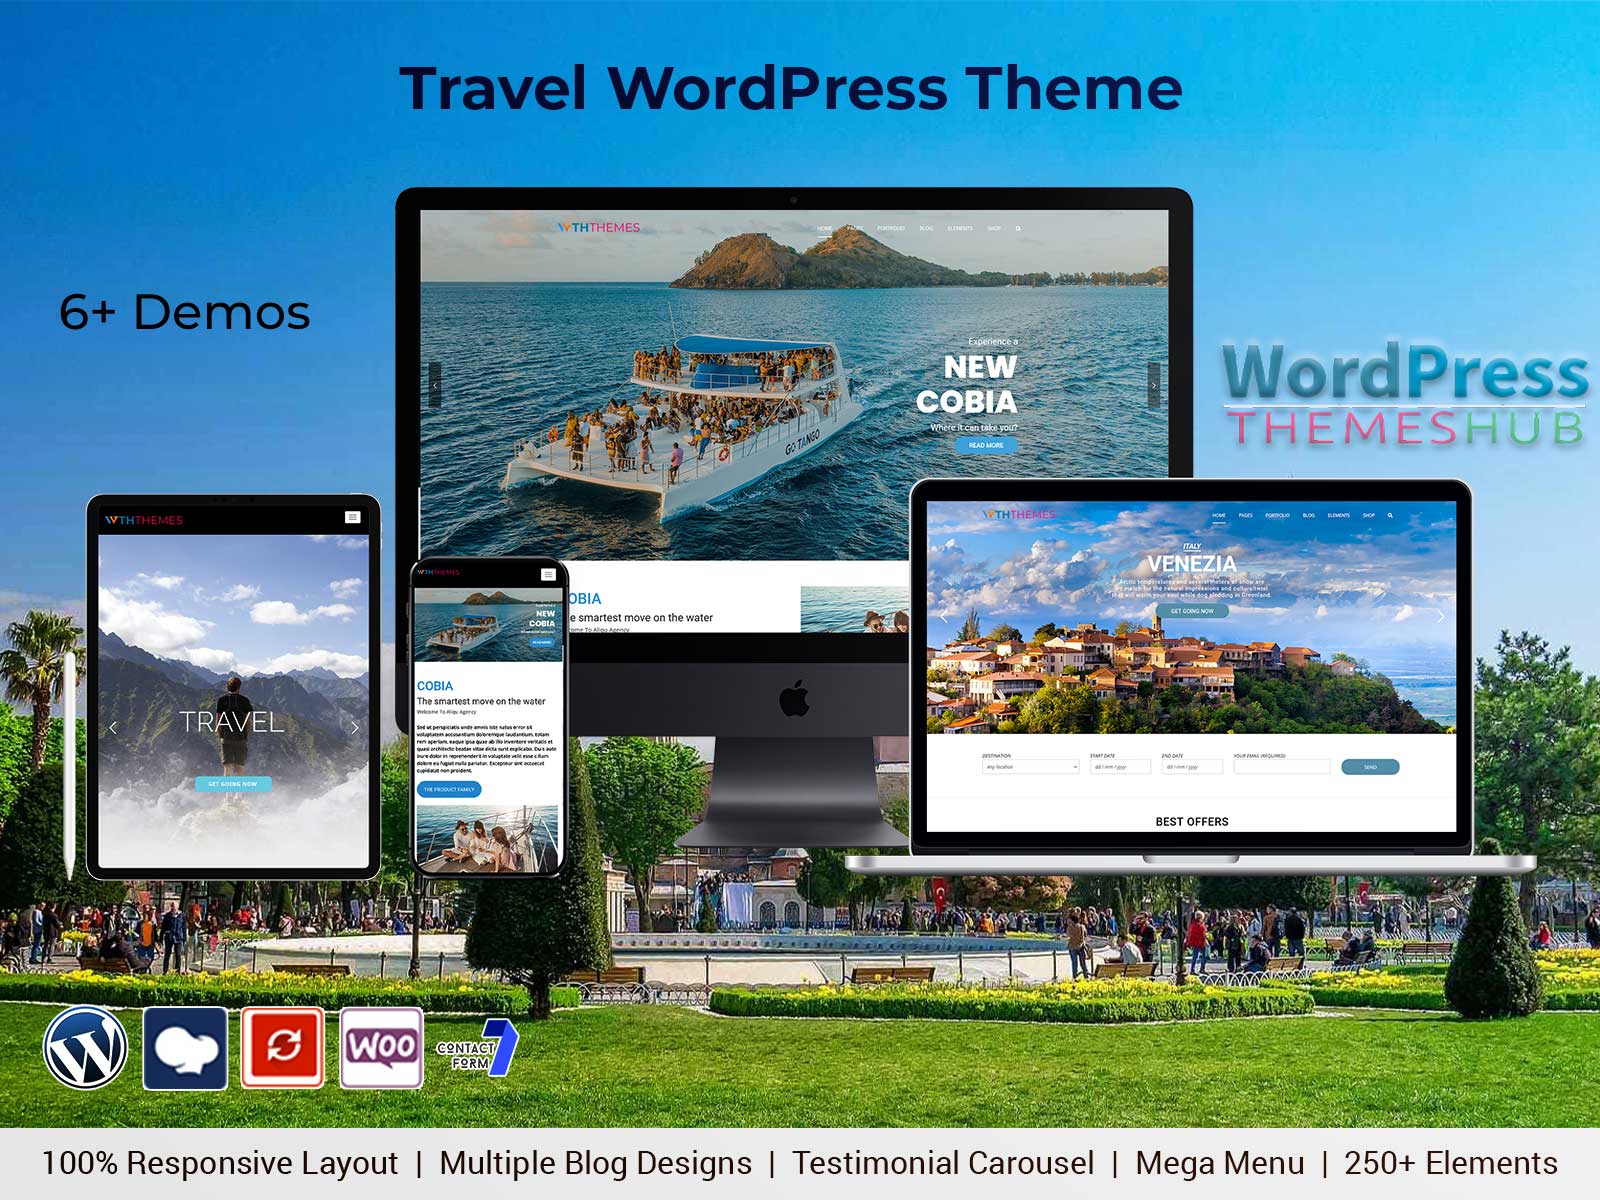 Travel WordPress Theme To Make Your Travel Websites